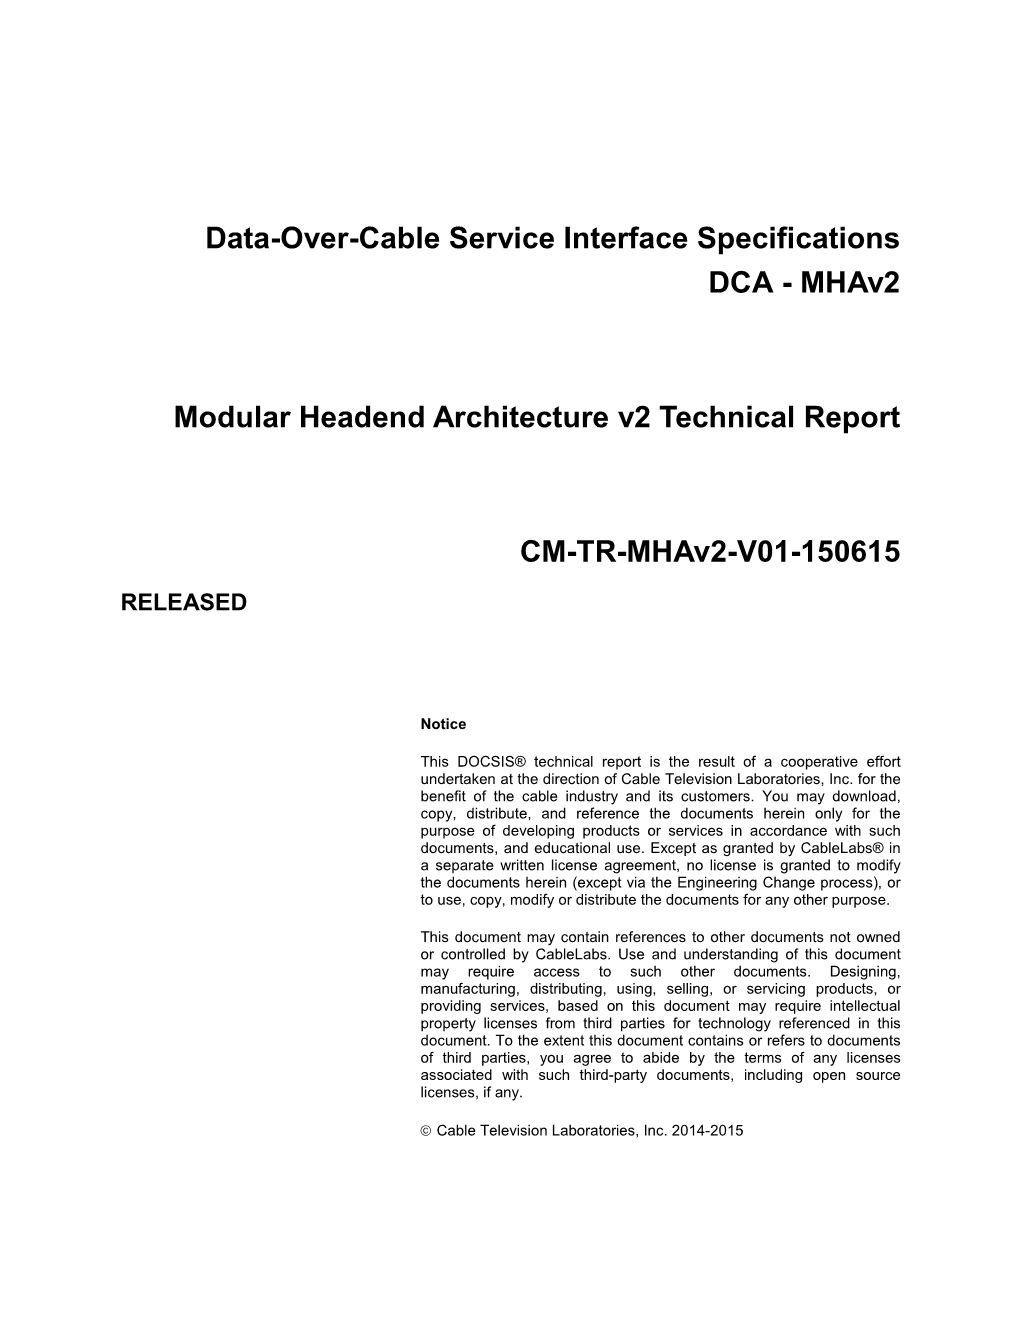 DOCSIS Mhav2 Technical Report